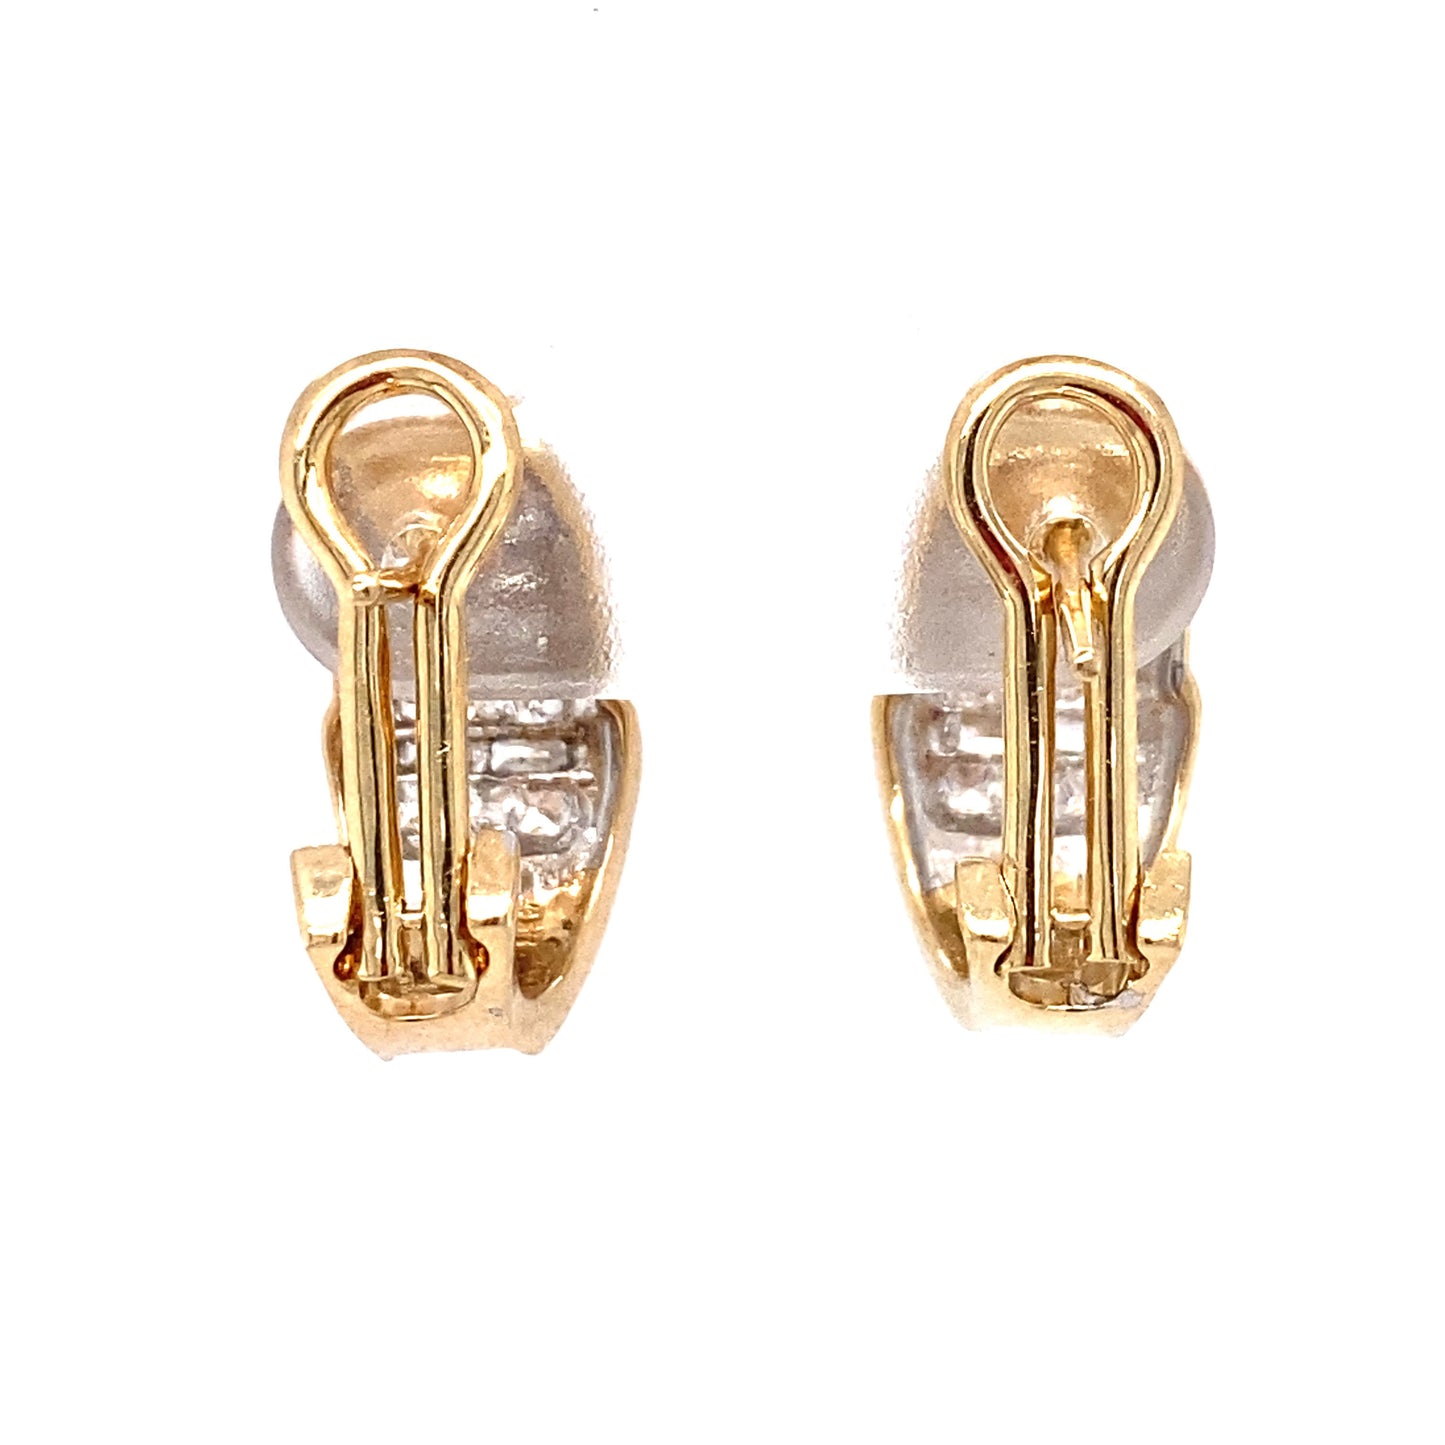 Circa 1980s Baguette and Princess Cut Diamond Earrings in 14K Gold